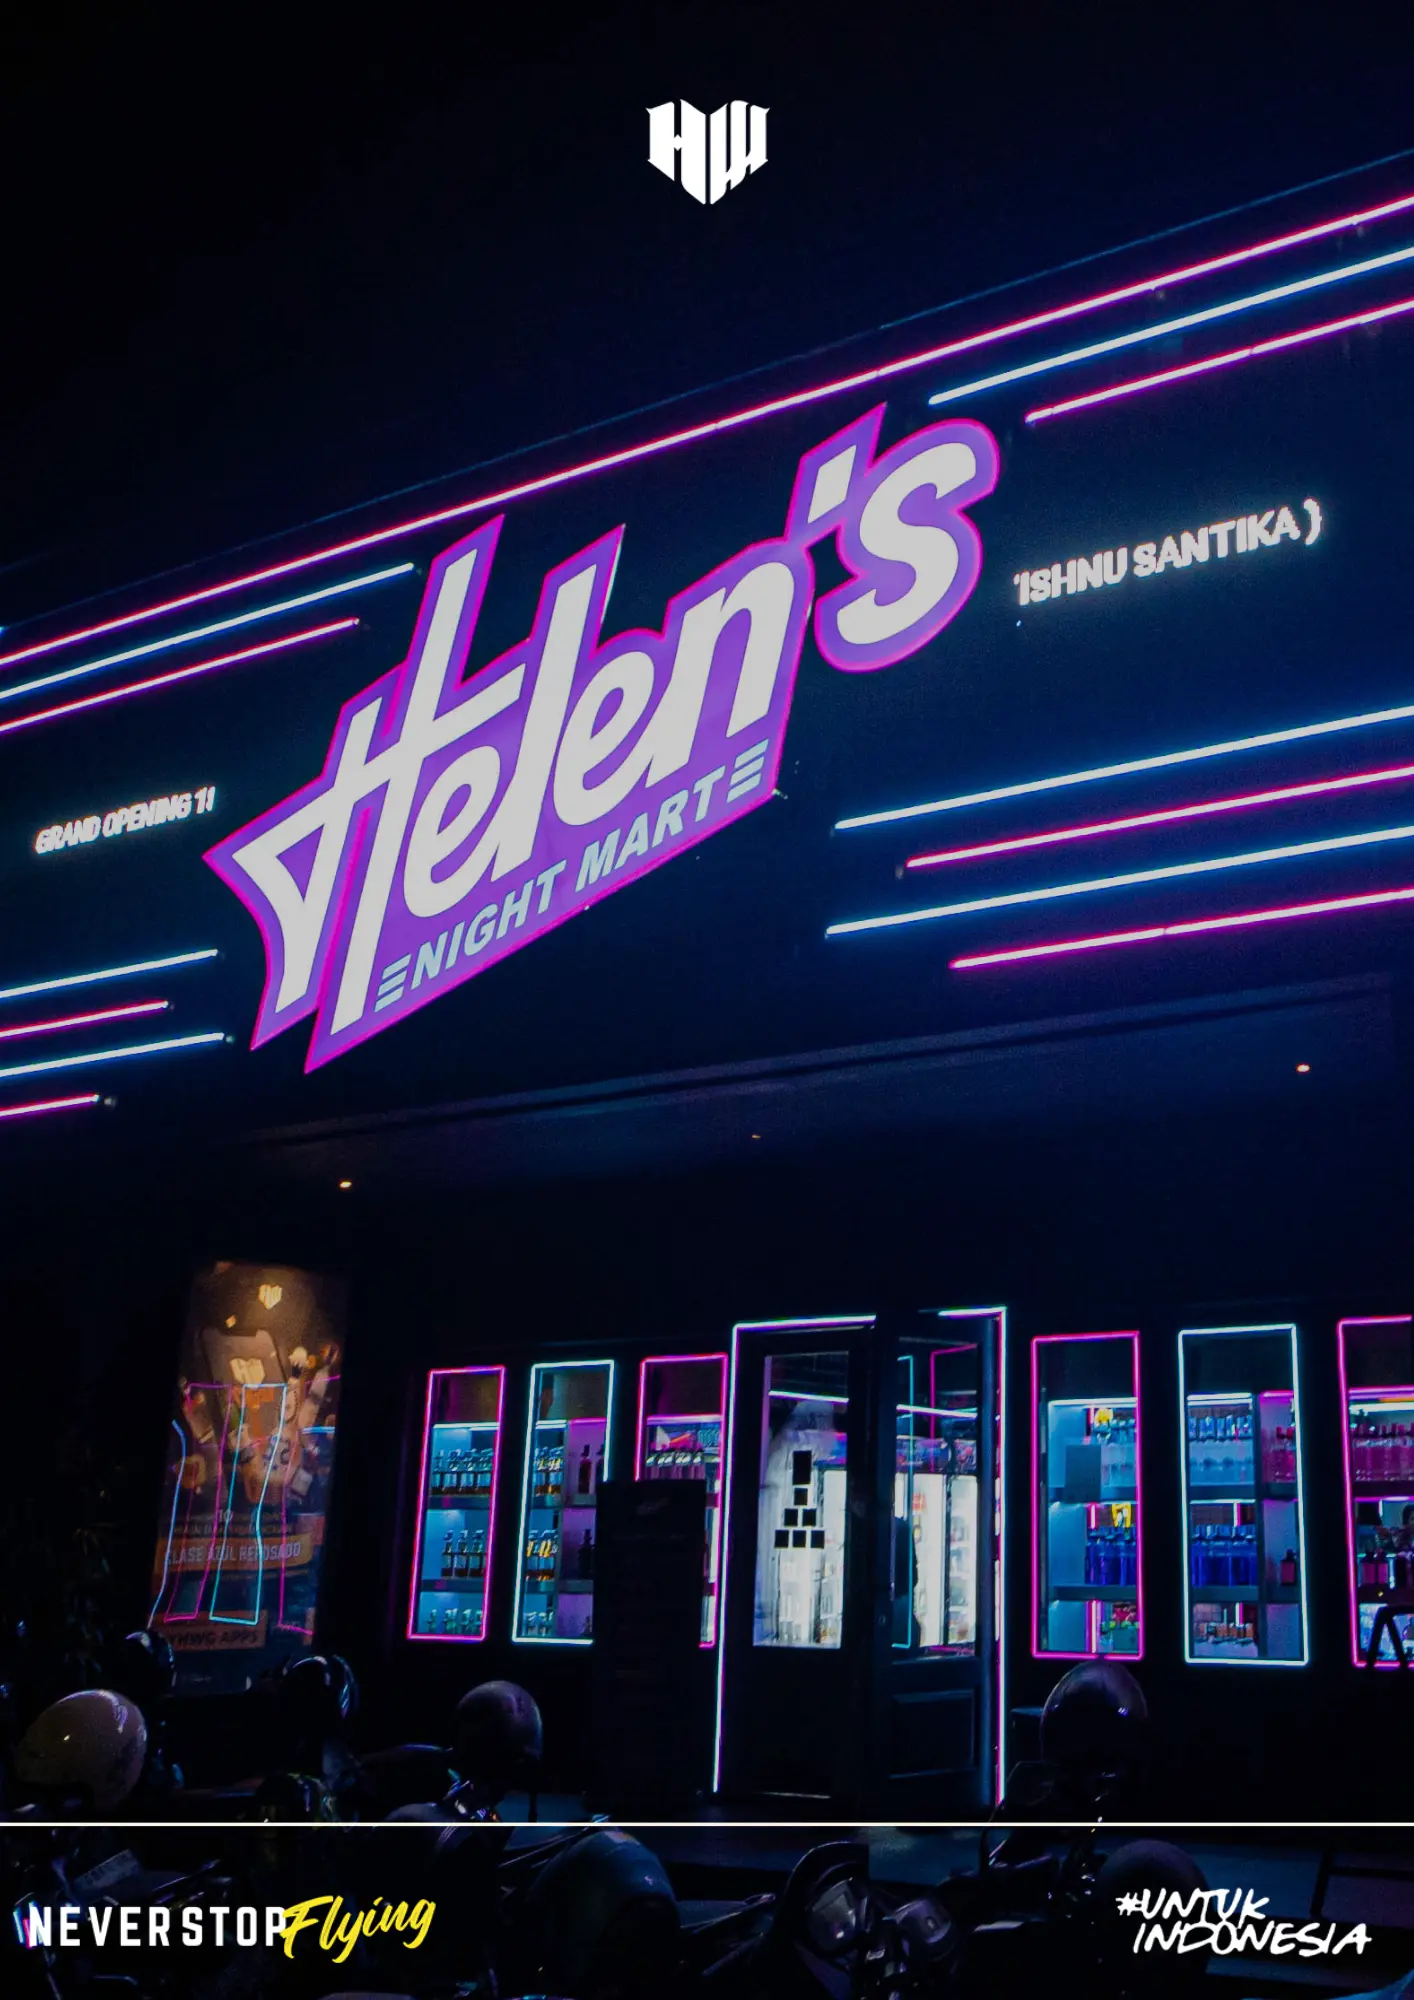 Helen’s Night Mart Kini Buka Gerai di Surabaya, Akan Ada Karaoke Bersama Stanley Hao